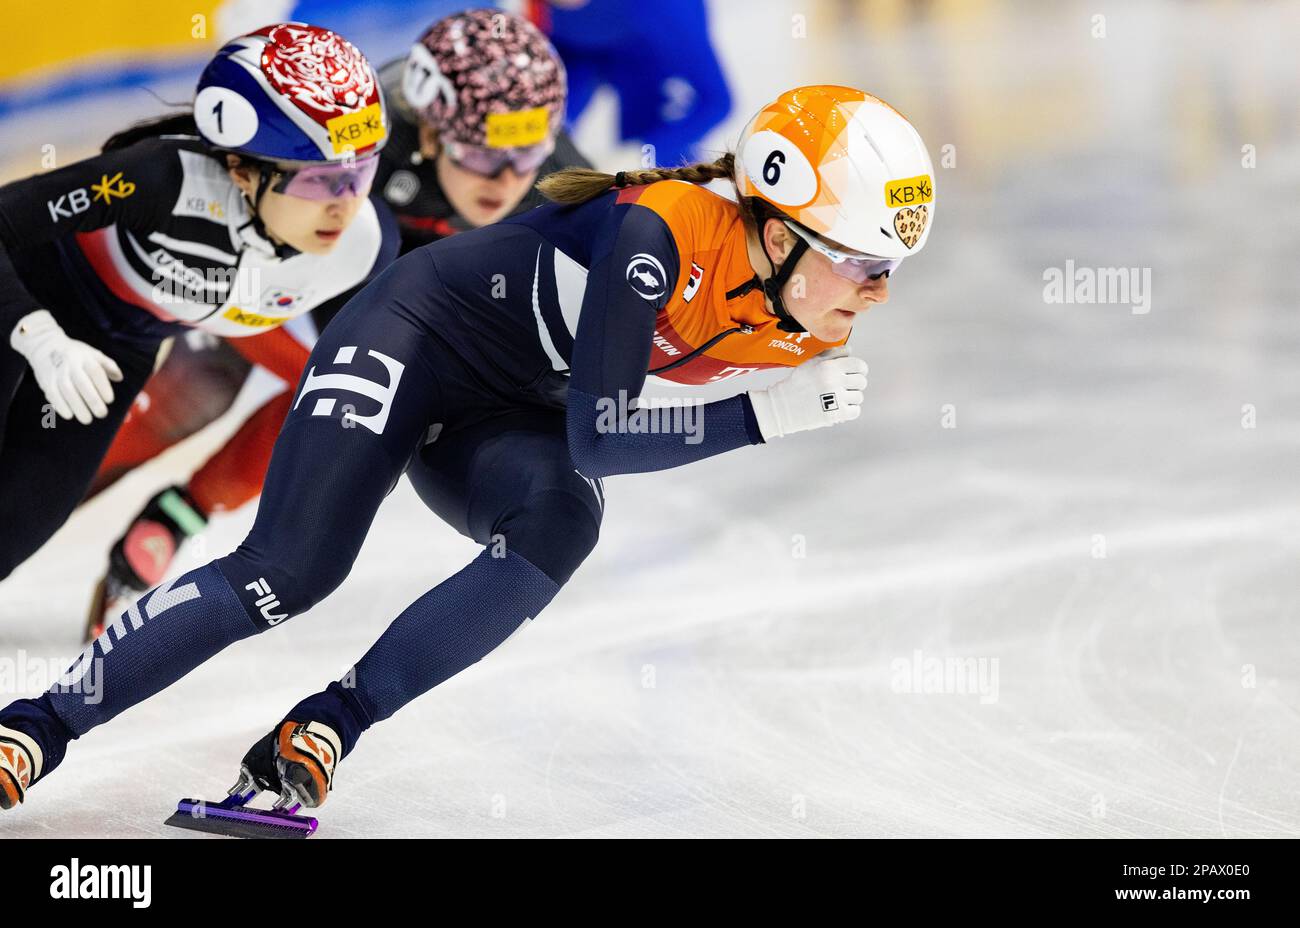 SEOUL - Yara van Kerkhof in Aktion bei der letzten 3000m-Staffel während der Kurzstreckenweltmeisterschaft in Südkorea. ANP IRIS VAN DEN BROEK niederlande Out - belgien Out Credit: ANP/Alamy Live News Stockfoto